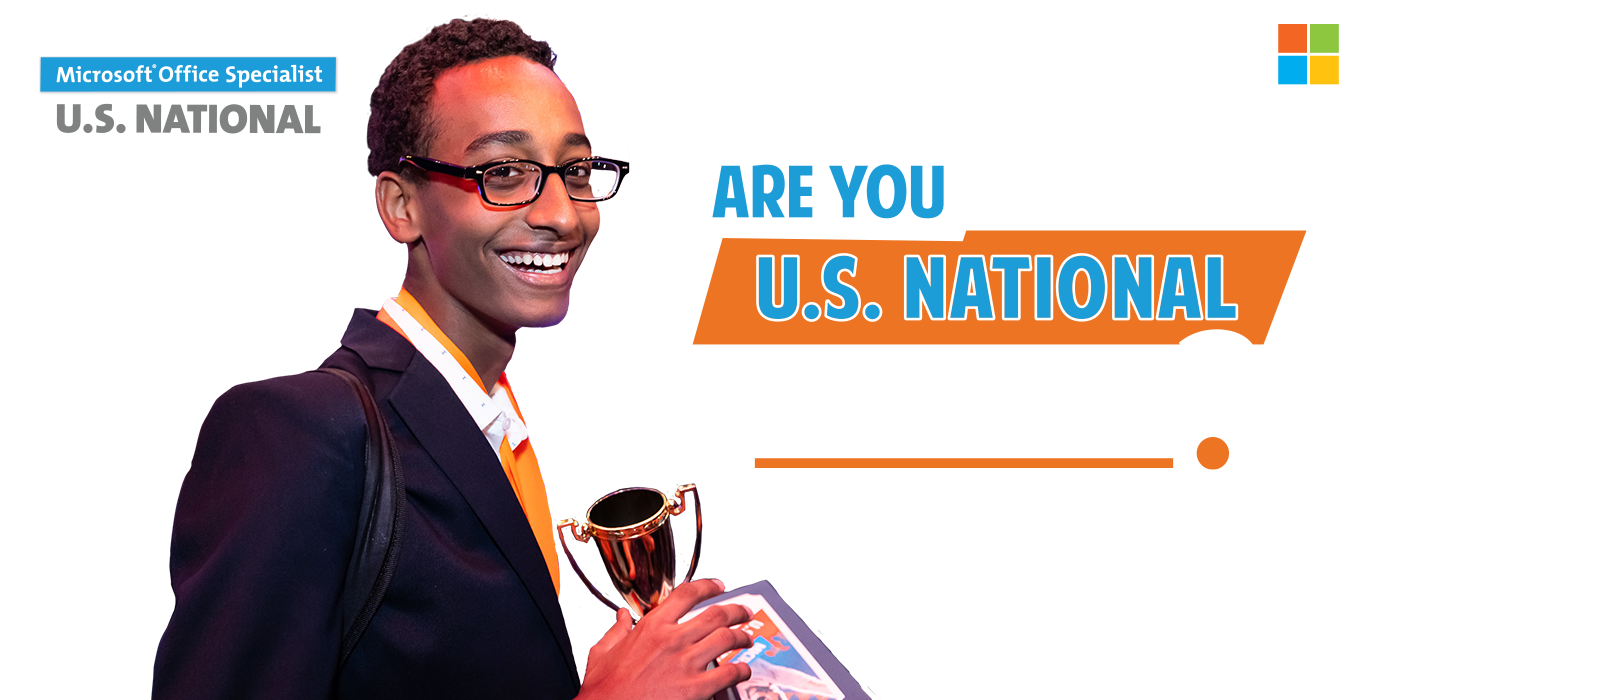 Microsoft Office Specialist U.S. National Championship